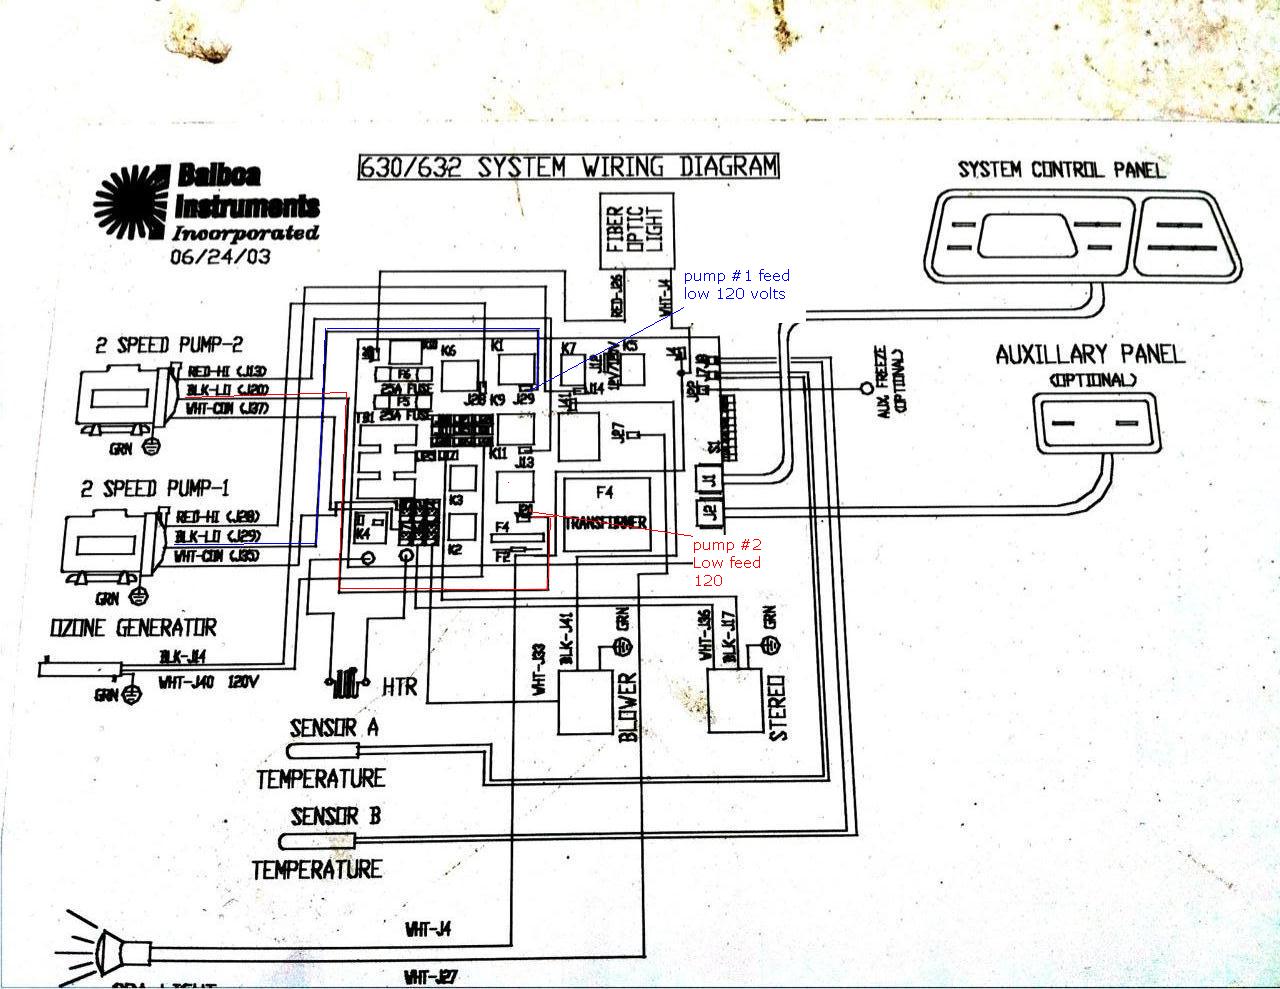 jacuzzi model essence r574 wiring diagram